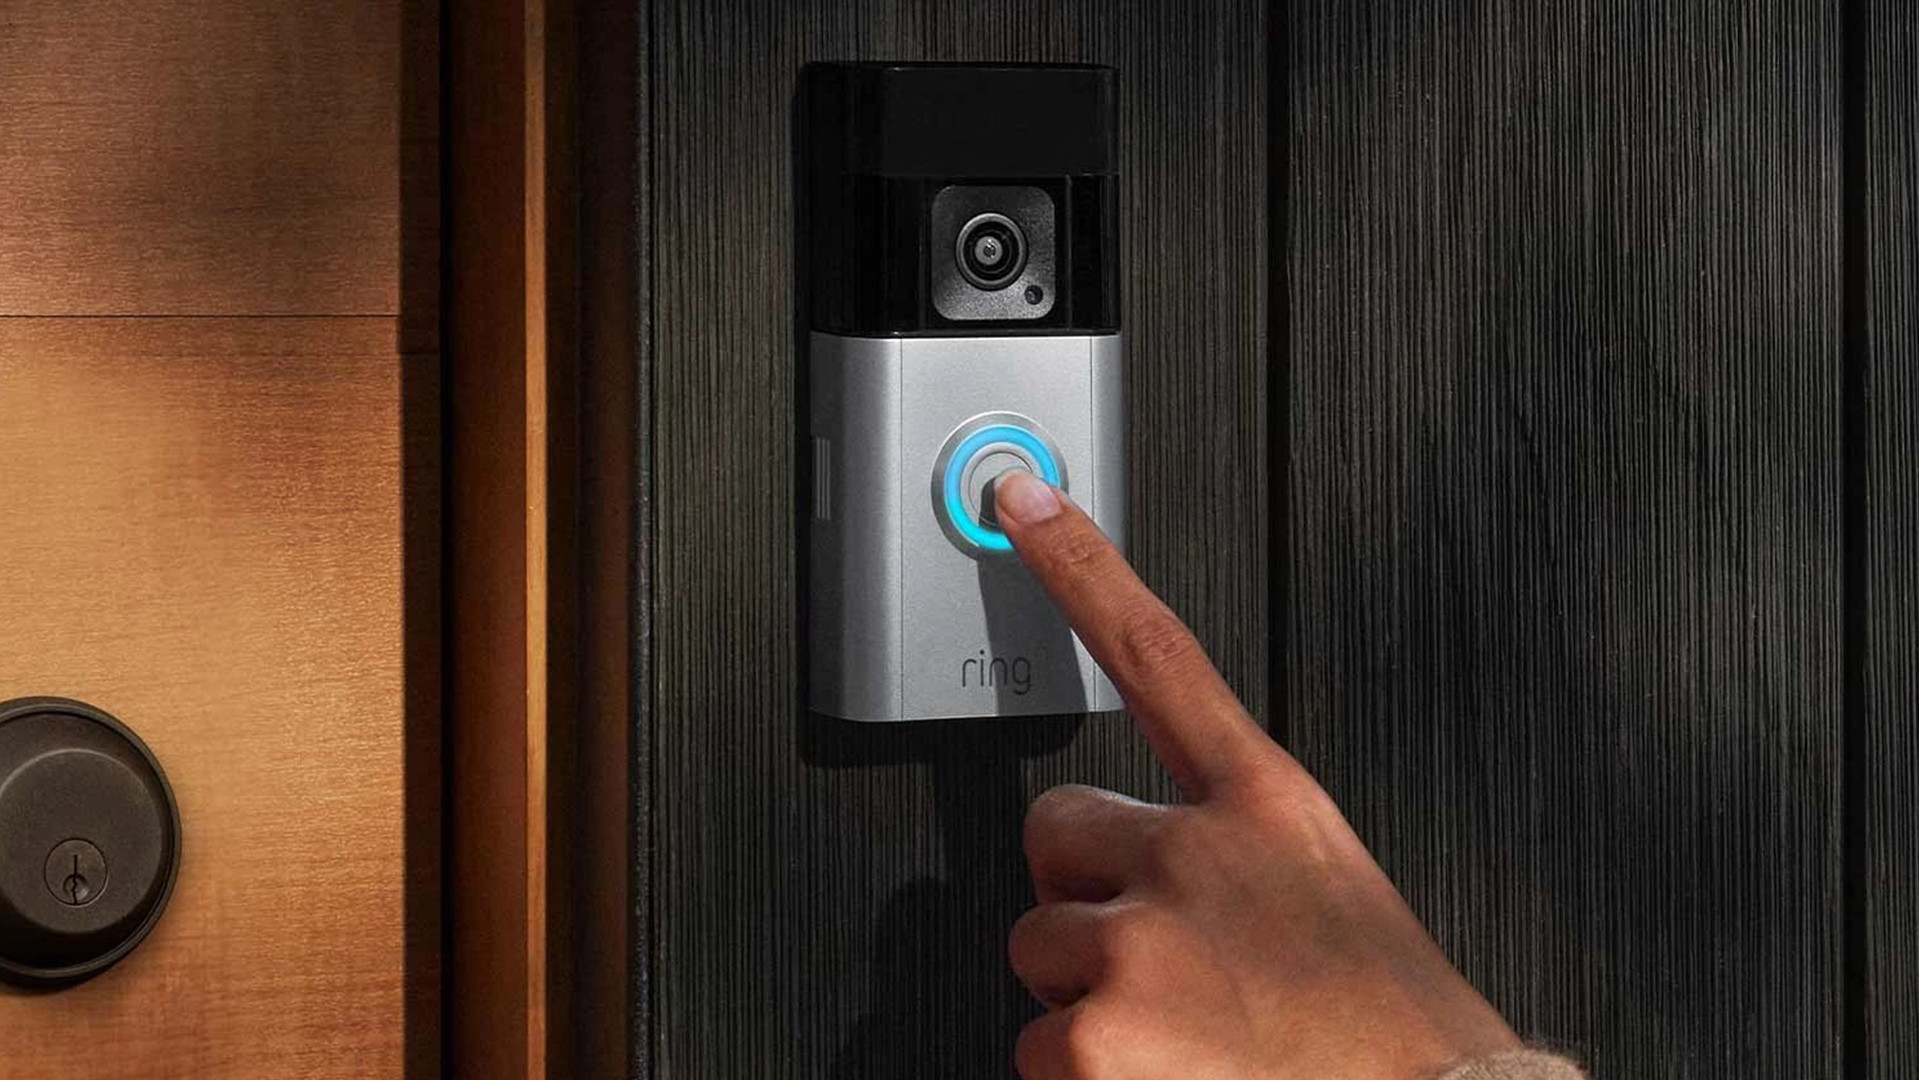 Ring Home Security & Video Doorbell Cameras | Very.co.uk